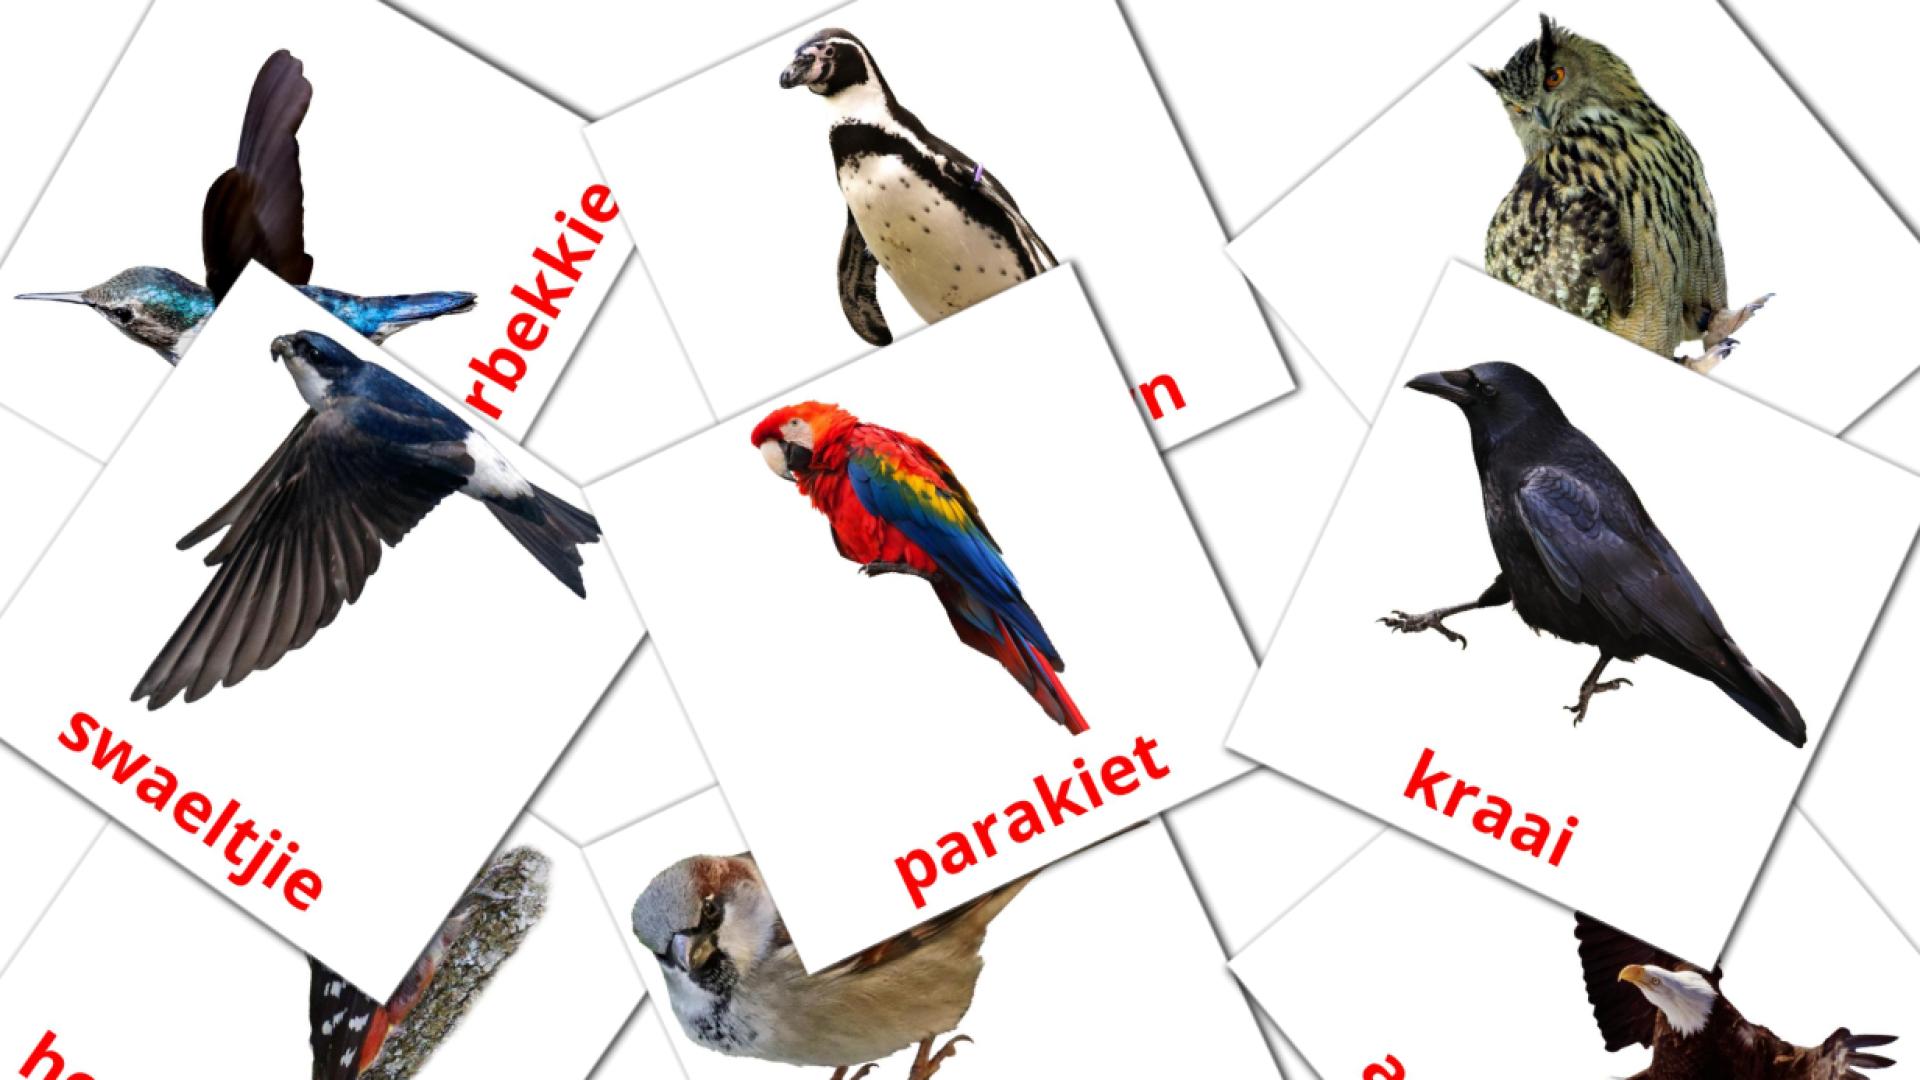 Pájaros salvajes - tarjetas de vocabulario en afrikáans